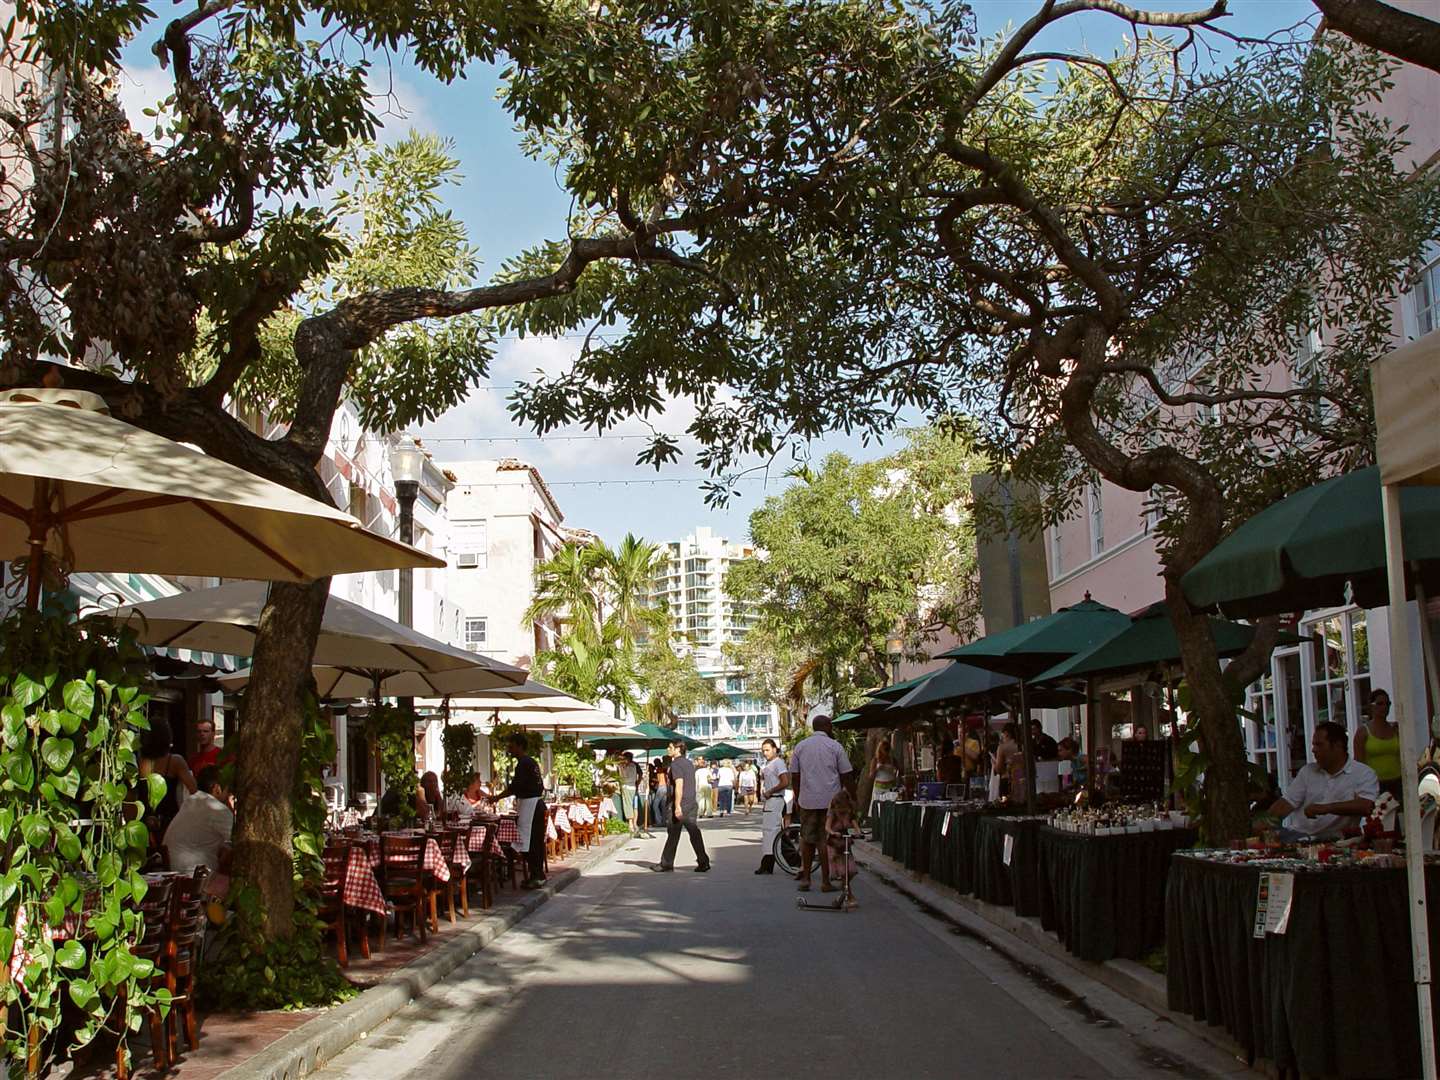 The Espanola Way pedestrian district. Picture: Greater Miami Convention & Visitors Bureau